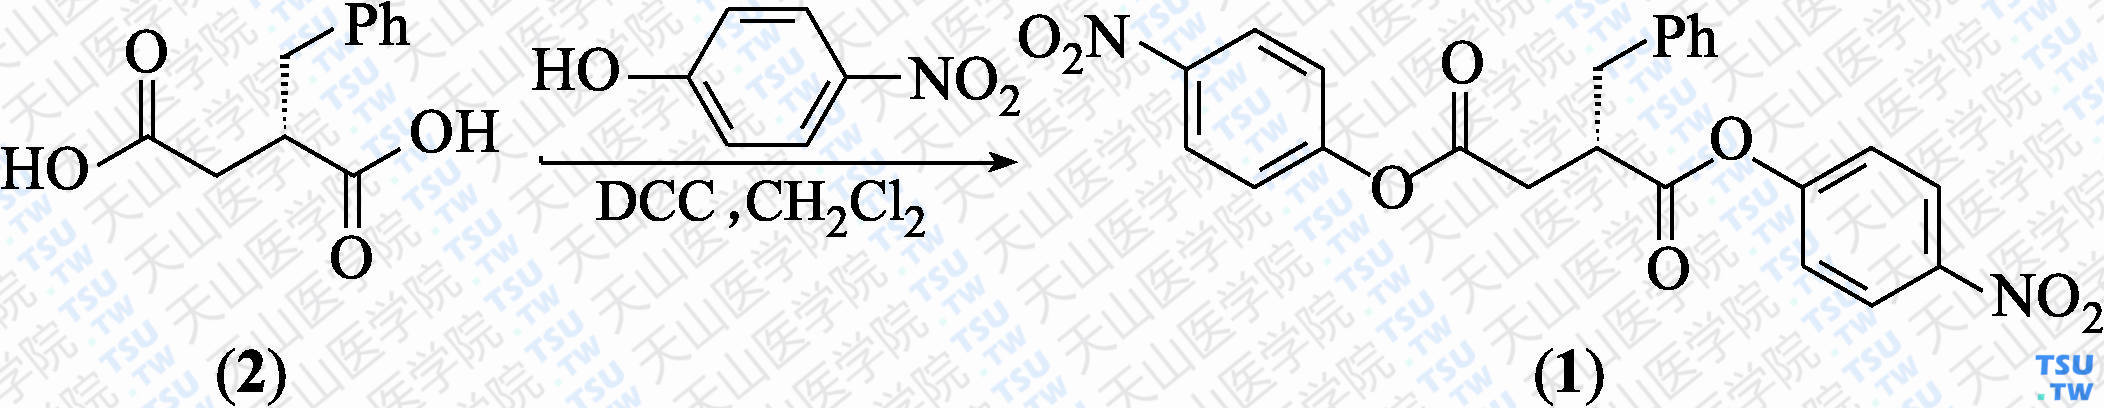 （<i>S</i>）-2-苄基丁二酸二对硝基苯酚酯（分子式：C<sub>23</sub>H<sub>18</sub>N<sub>2</sub>O<sub>8</sub>）的合成方法路线及其结构式